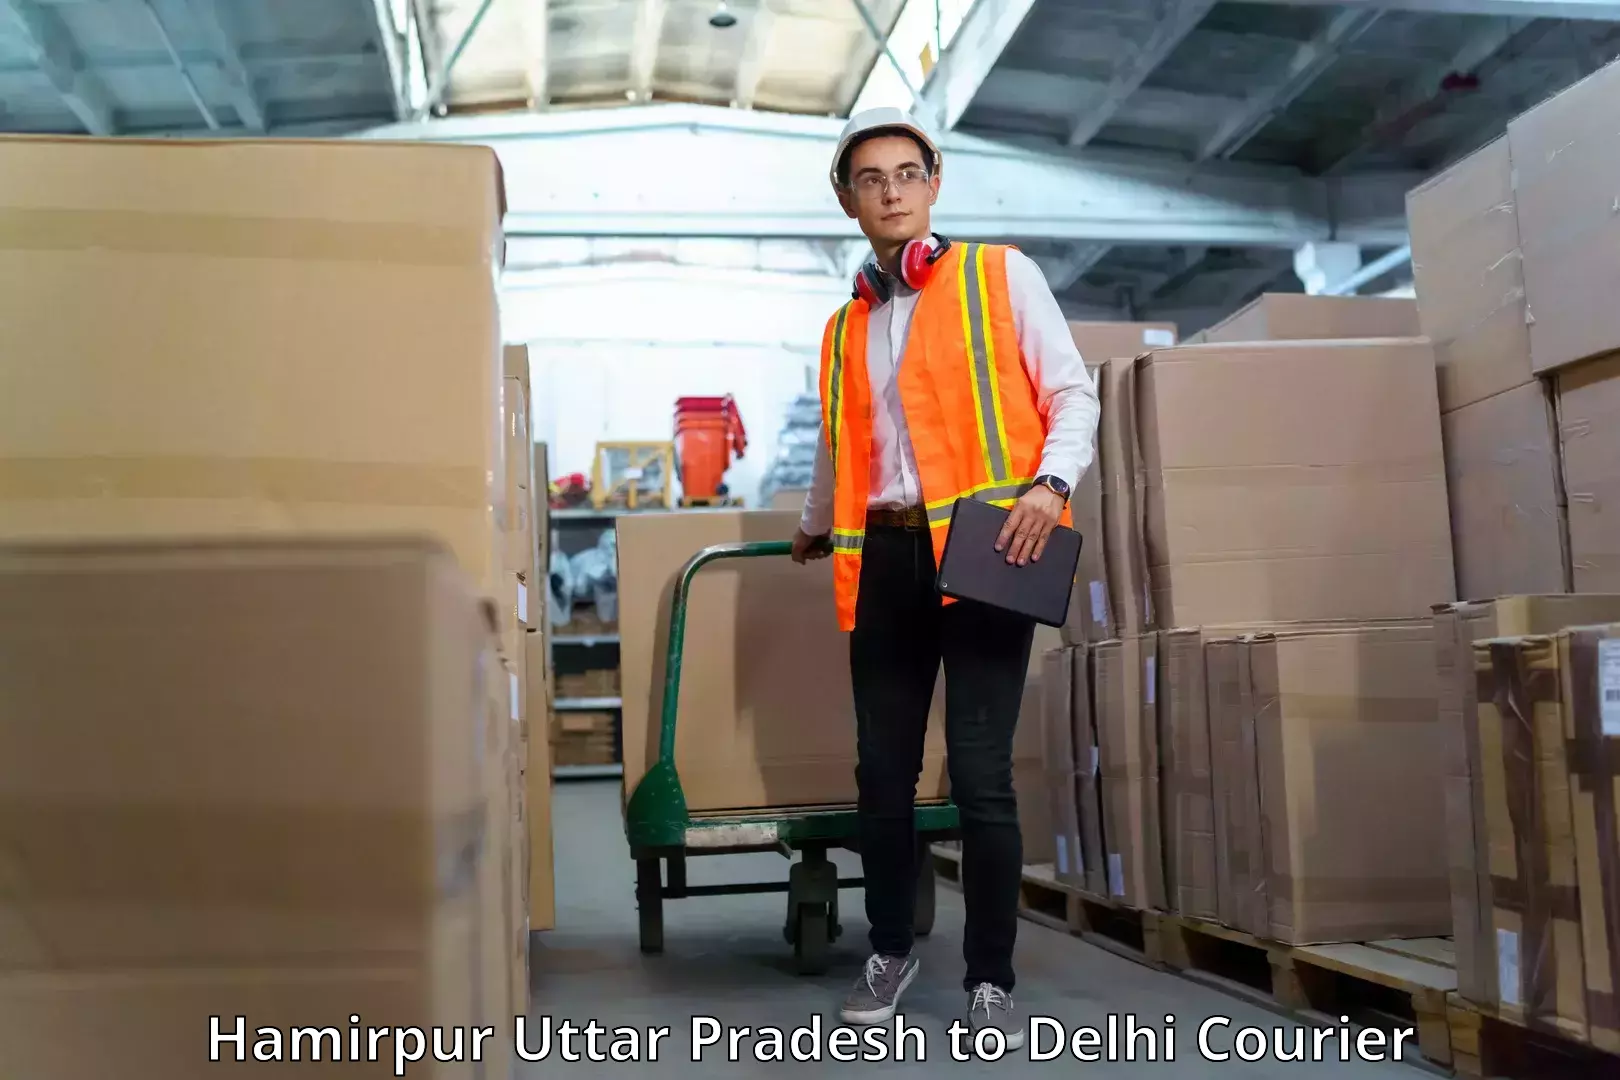 High-priority parcel service Hamirpur Uttar Pradesh to University of Delhi